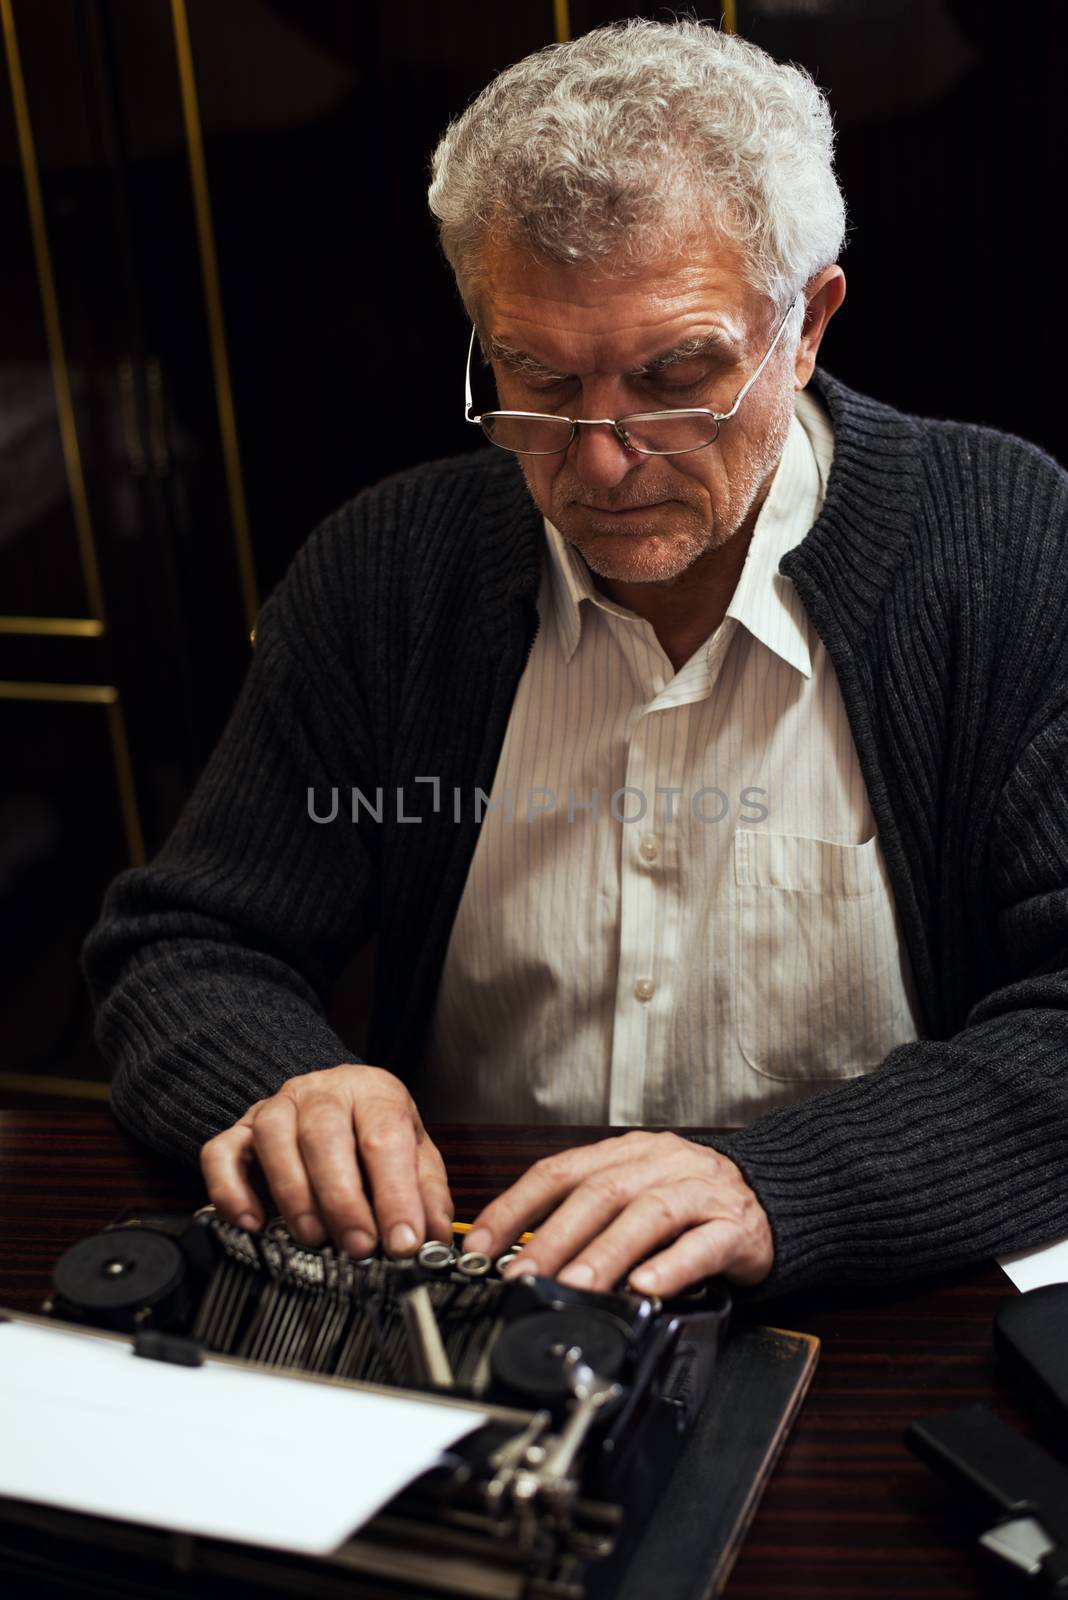 Retro Senior Man writer by MilanMarkovic78